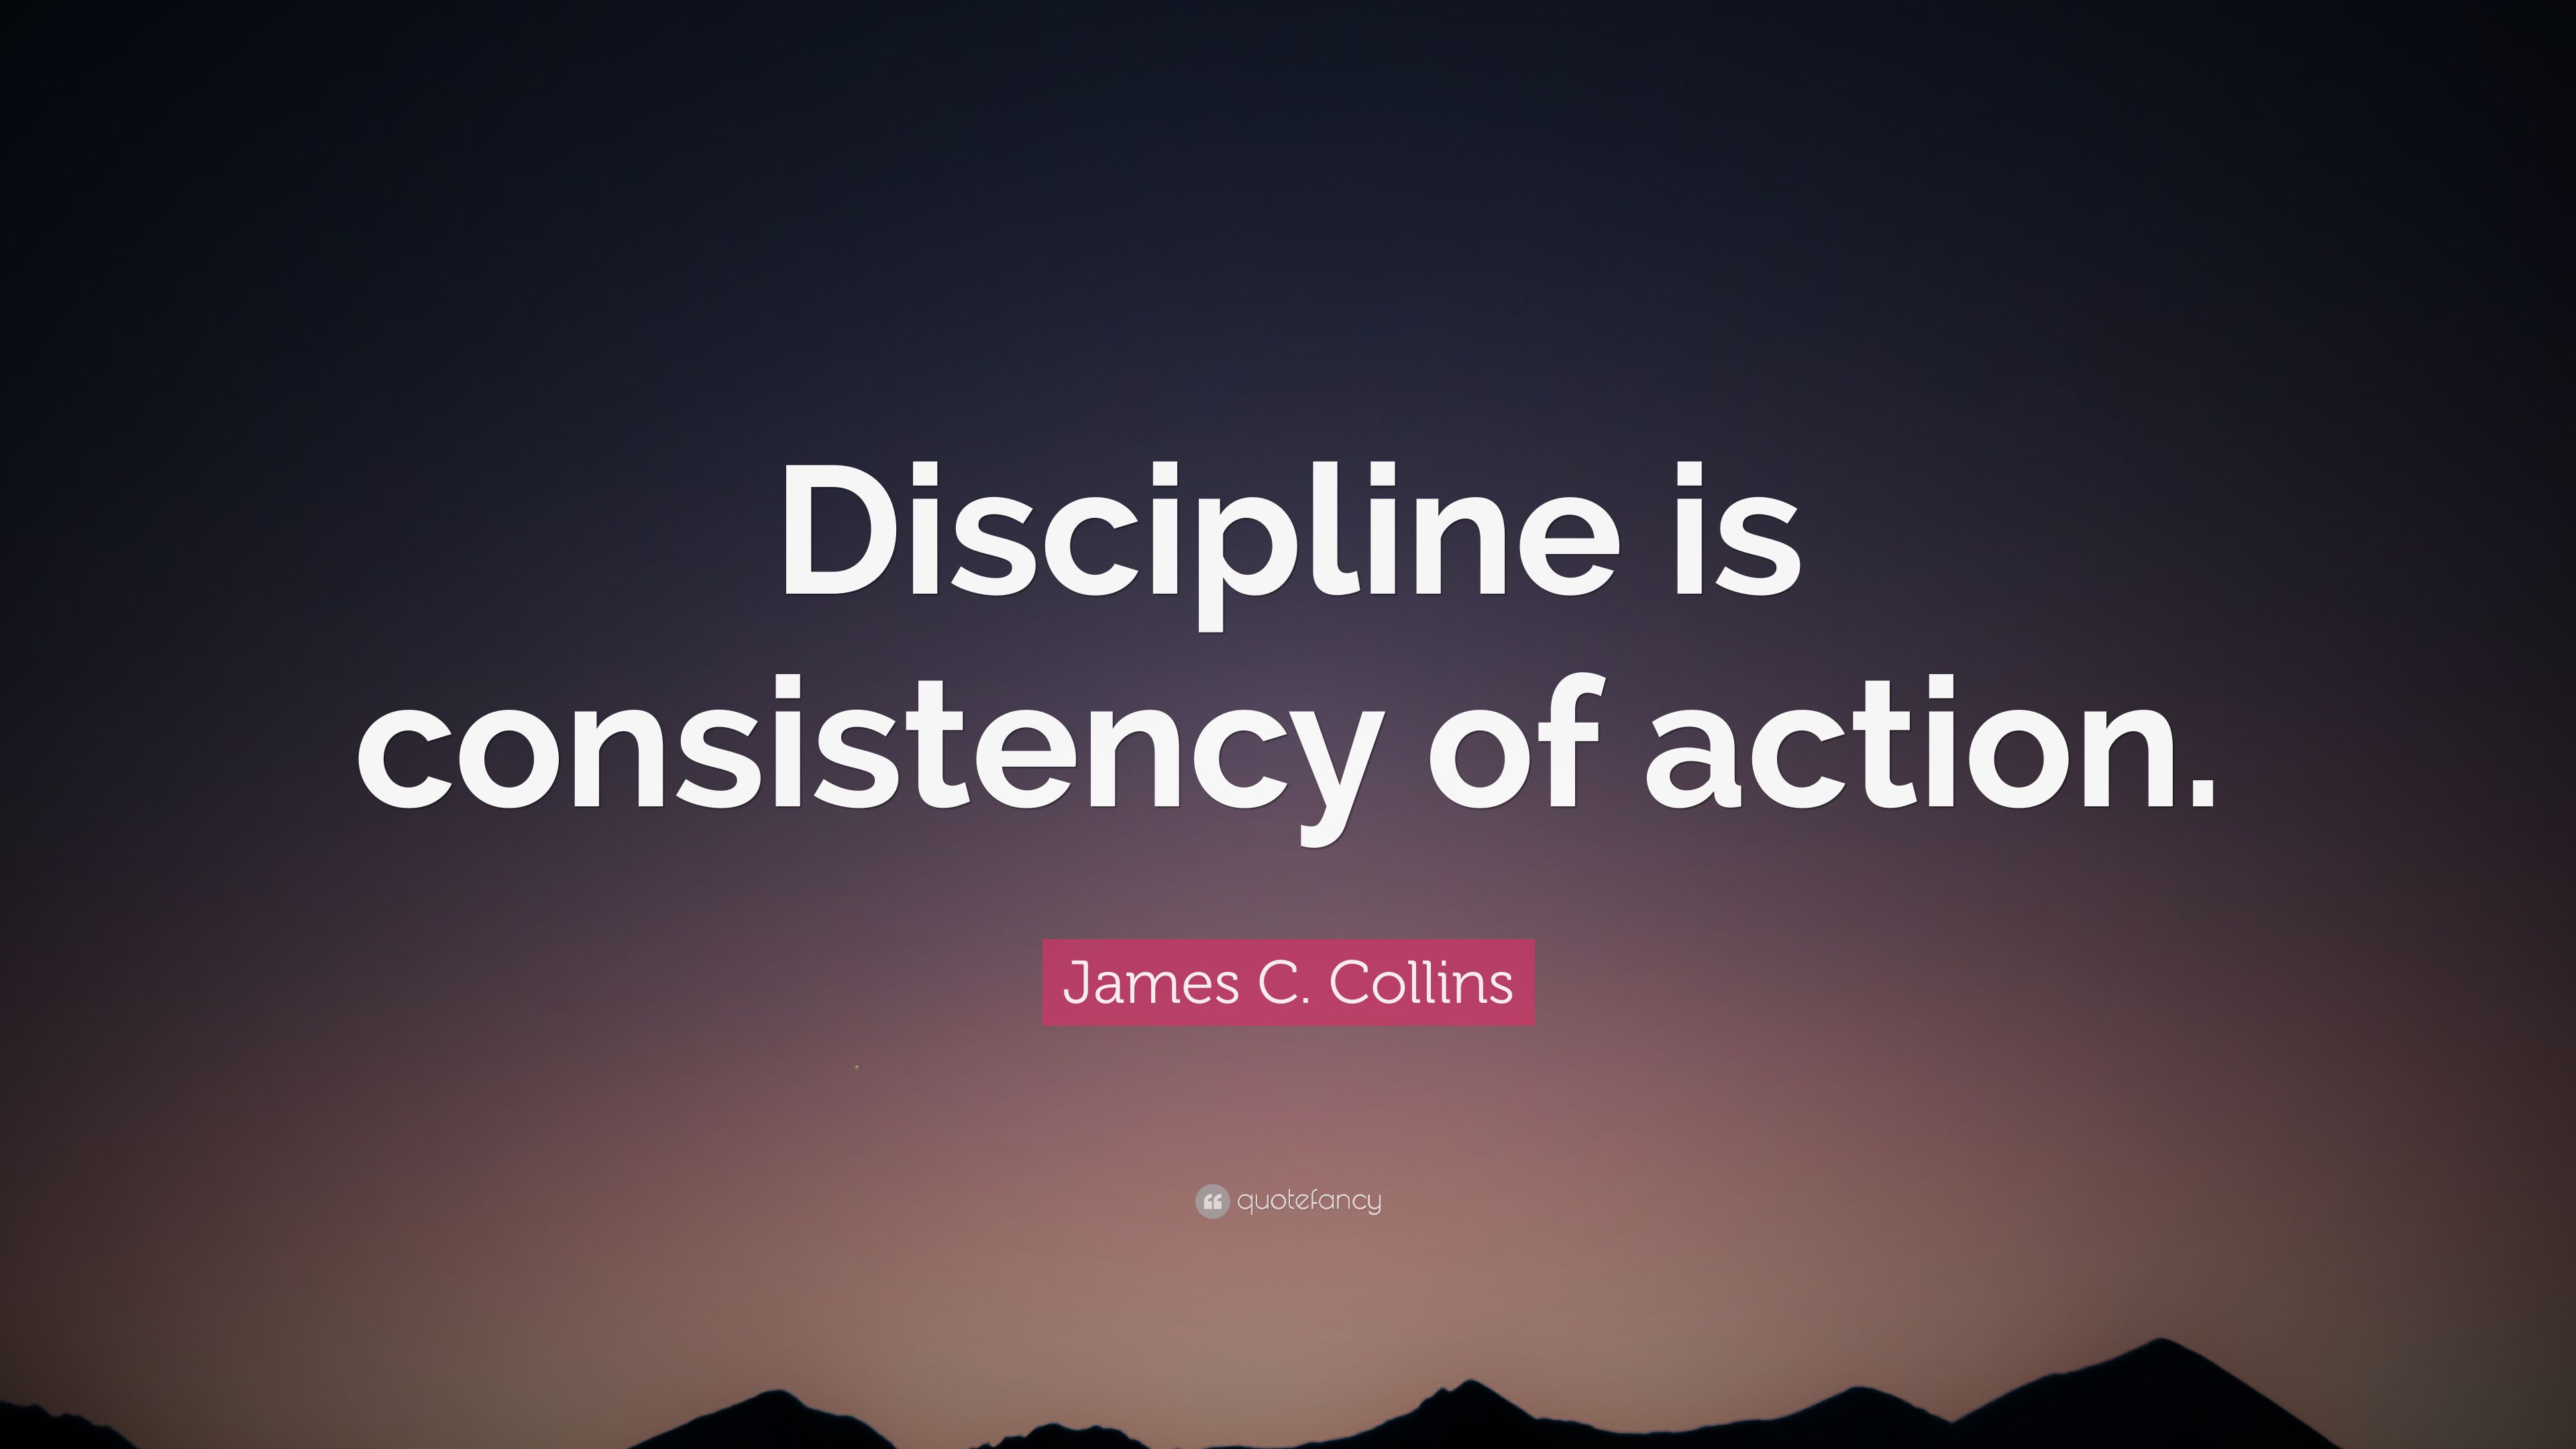 James C. Collins Quote: “Discipline is consistency of action.” (7 wallpaper)